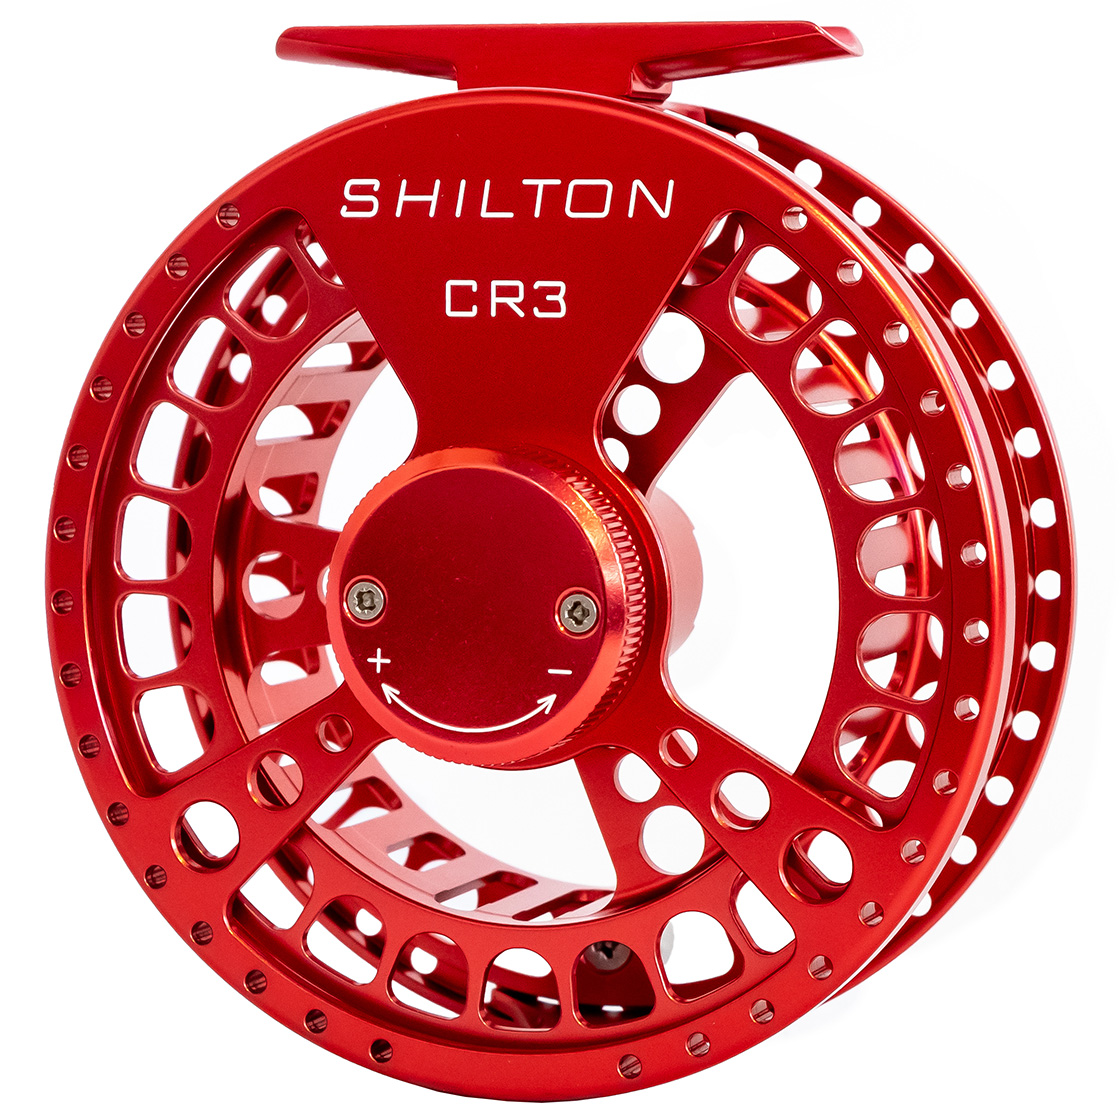 Shilton CR Series Fly Reel red, Reels, Fly Reels